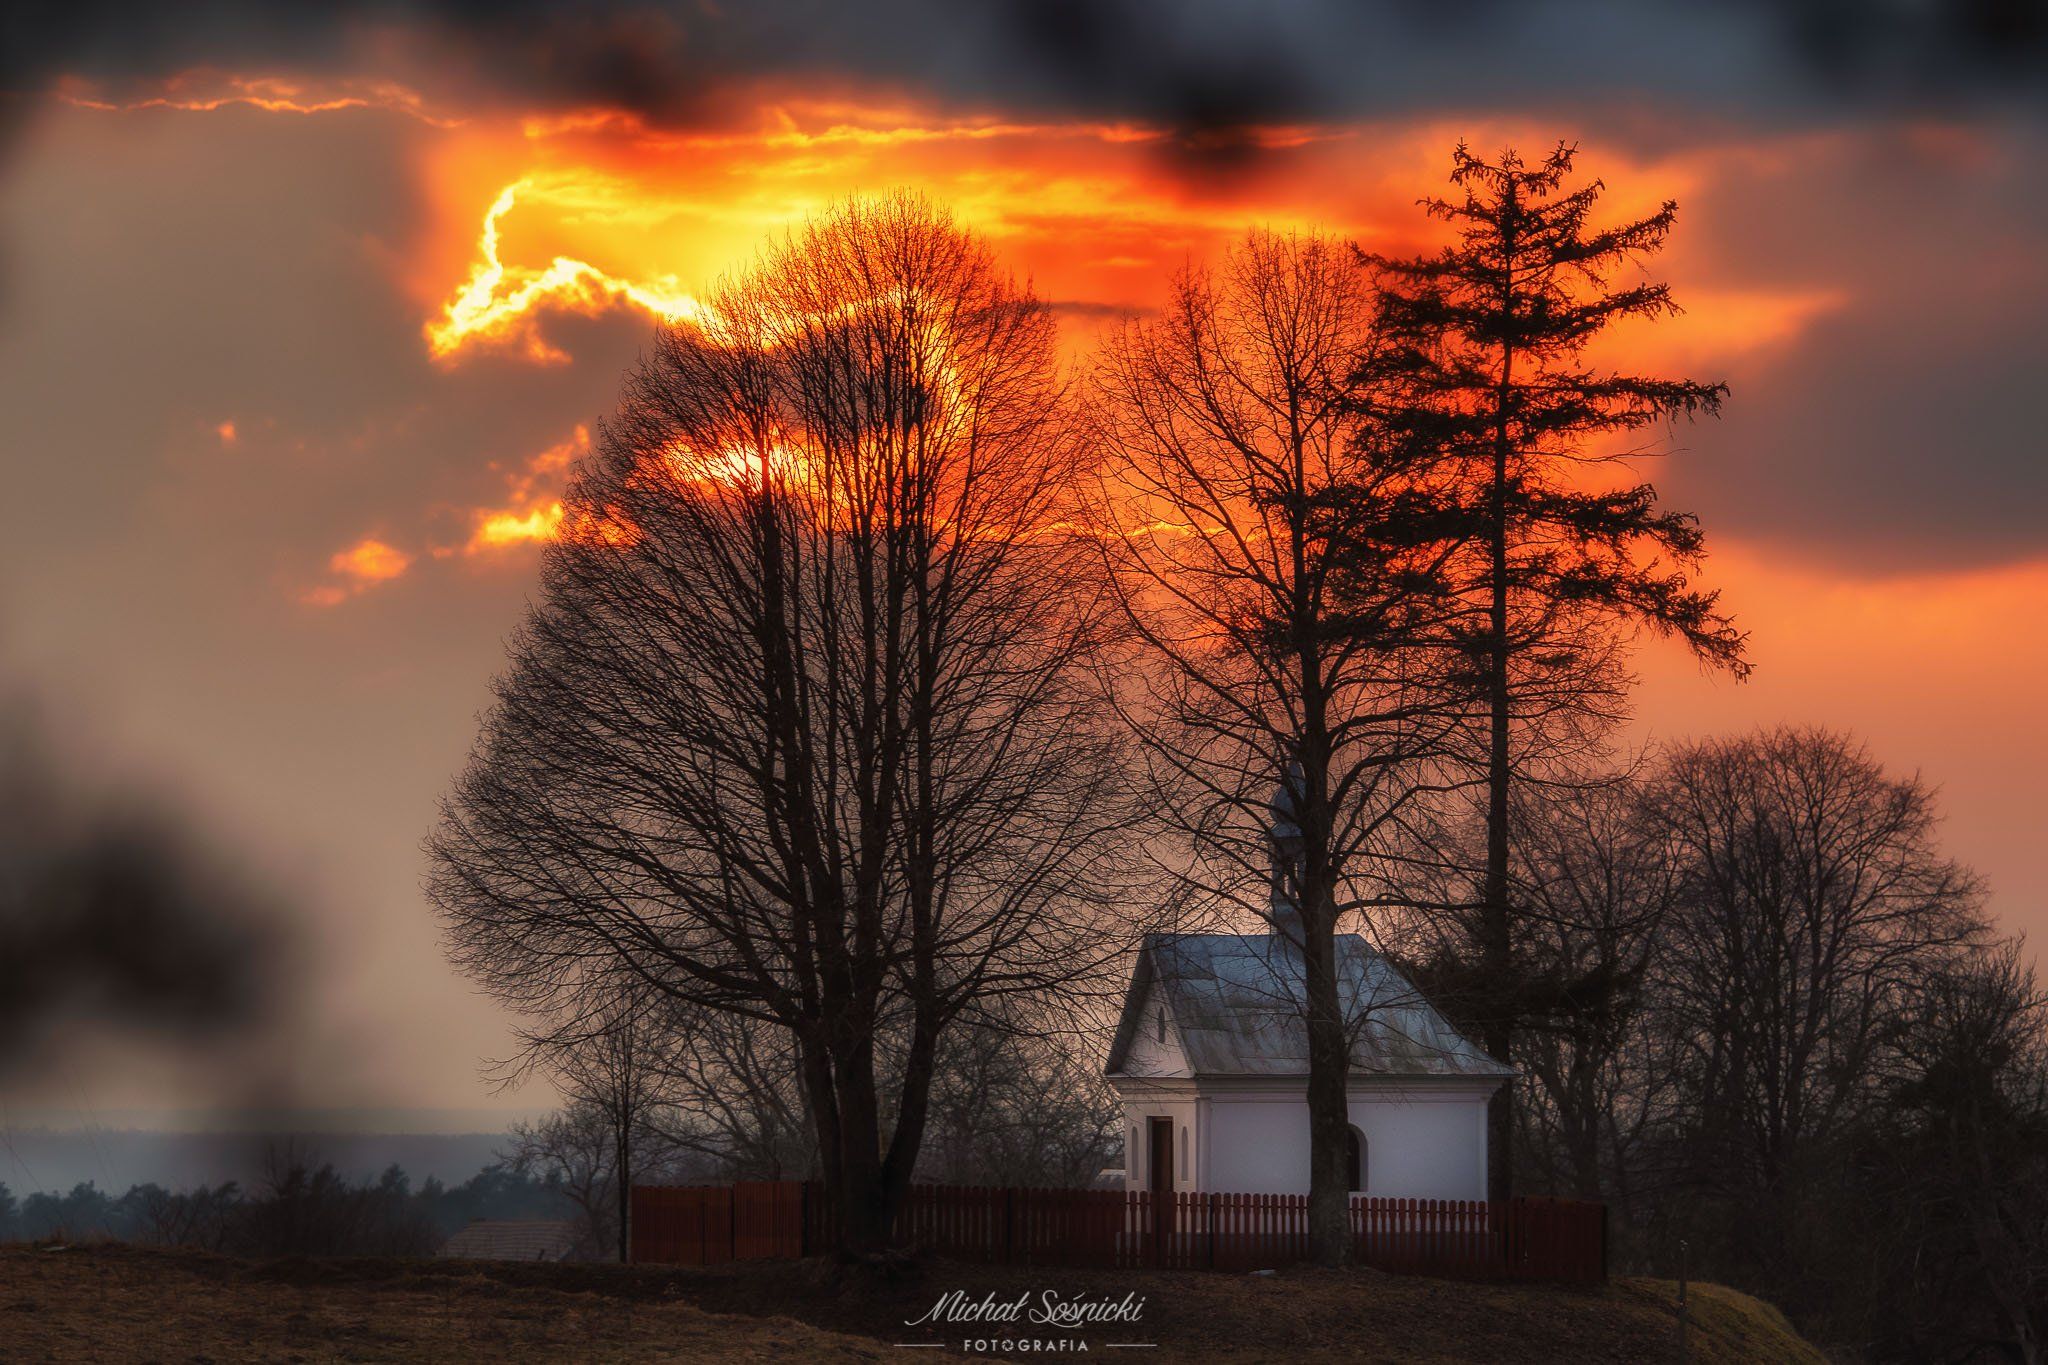 #poland #roztocze #church #sunset #sky #dramatic #nature #best #benro #benq #pentax, Michał Sośnicki